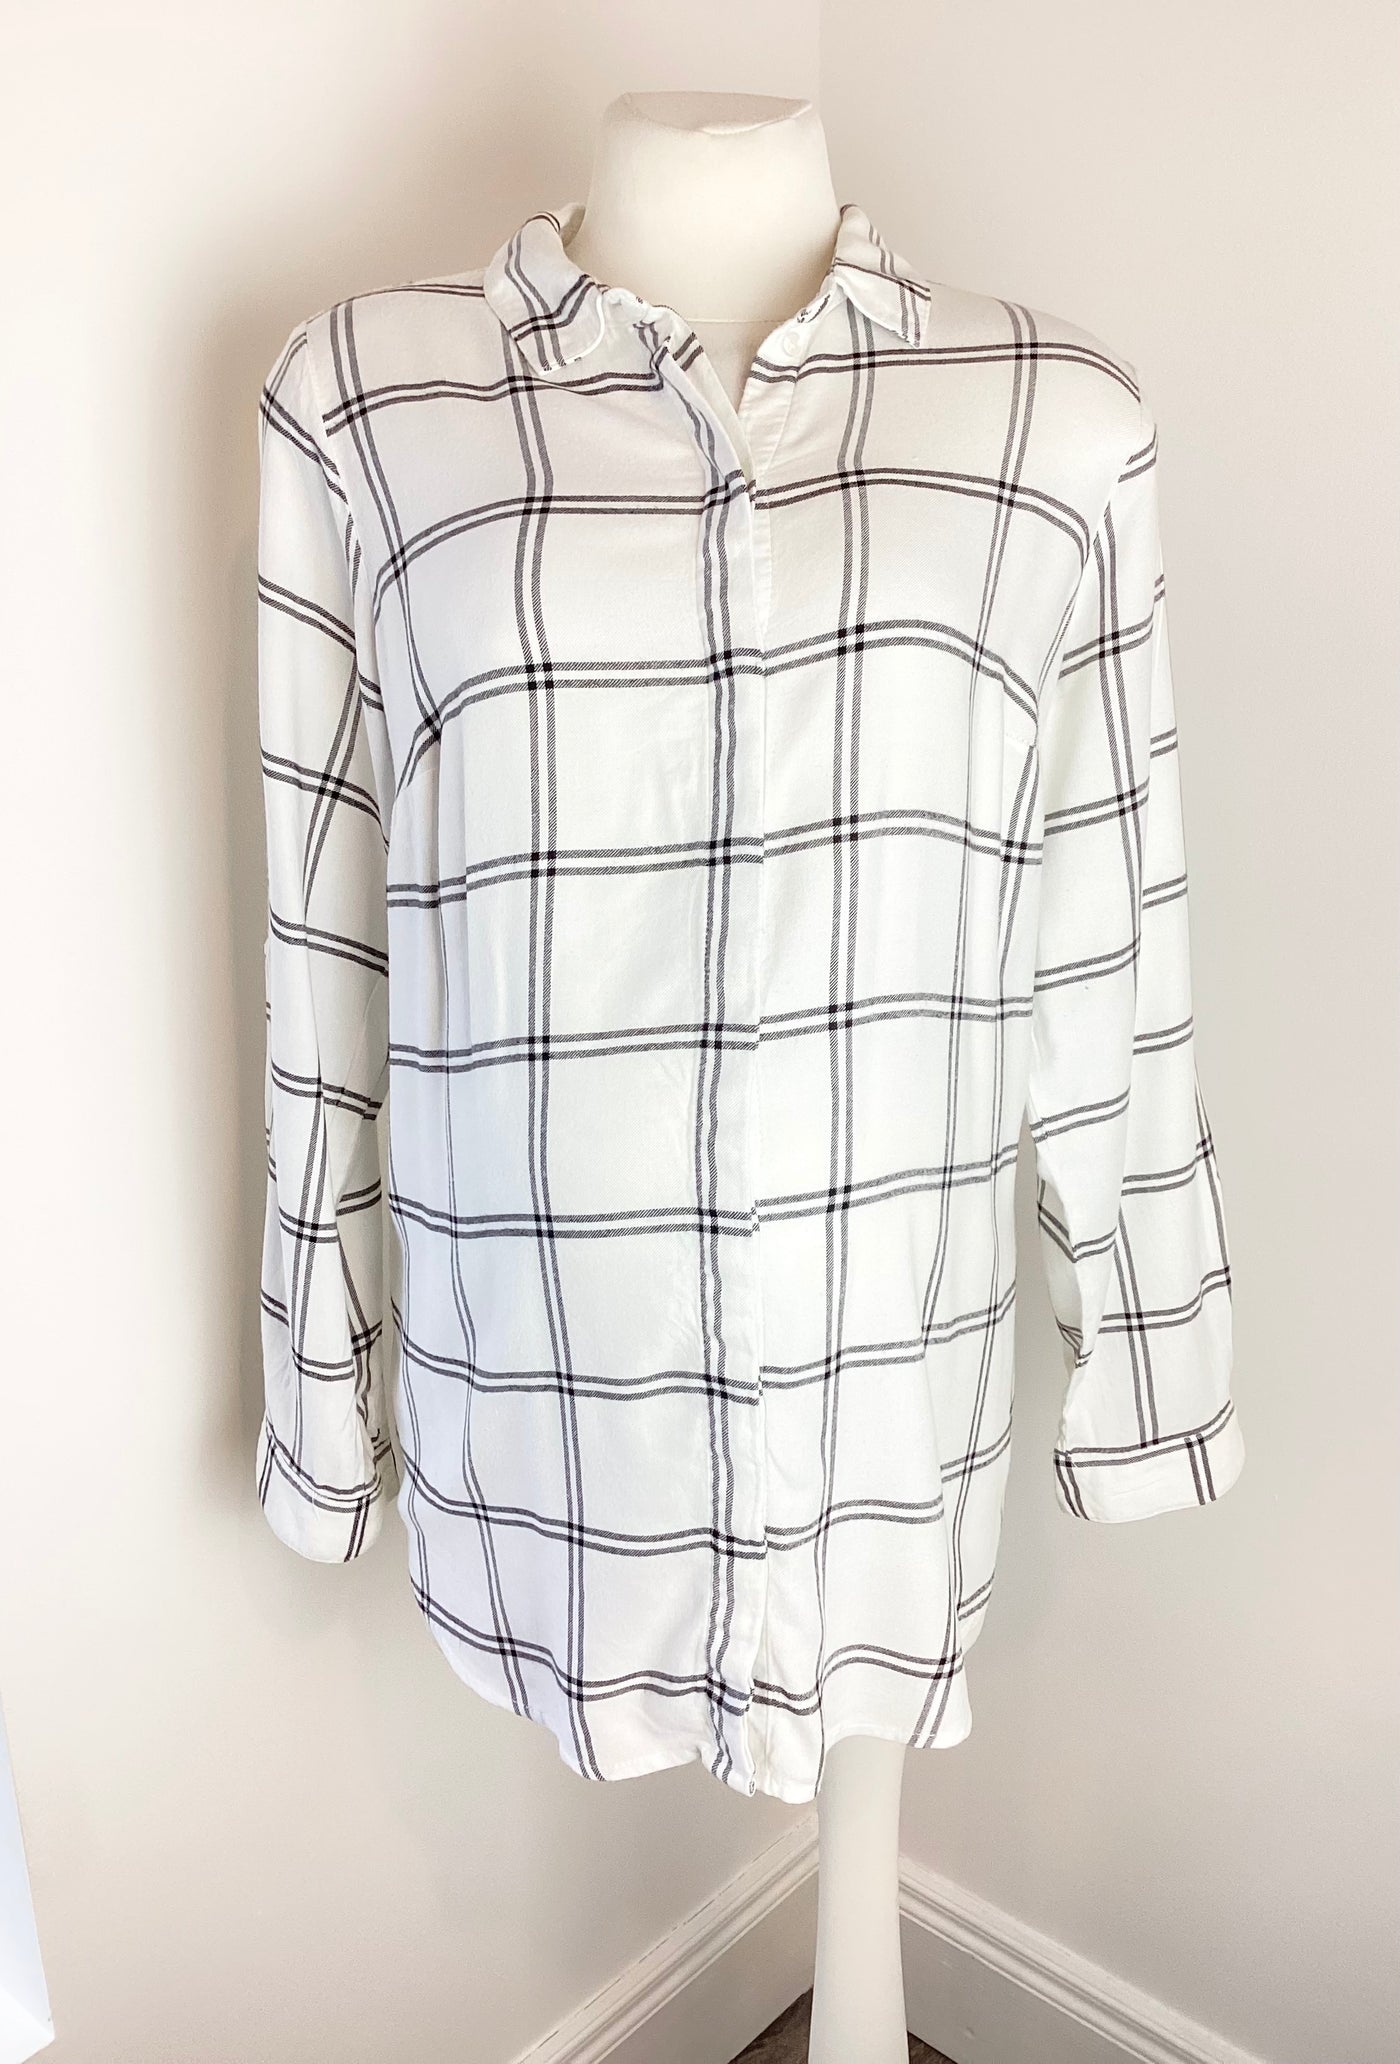 H&M Mama white & black checked shirt - Size M (Approx UK 10/12)